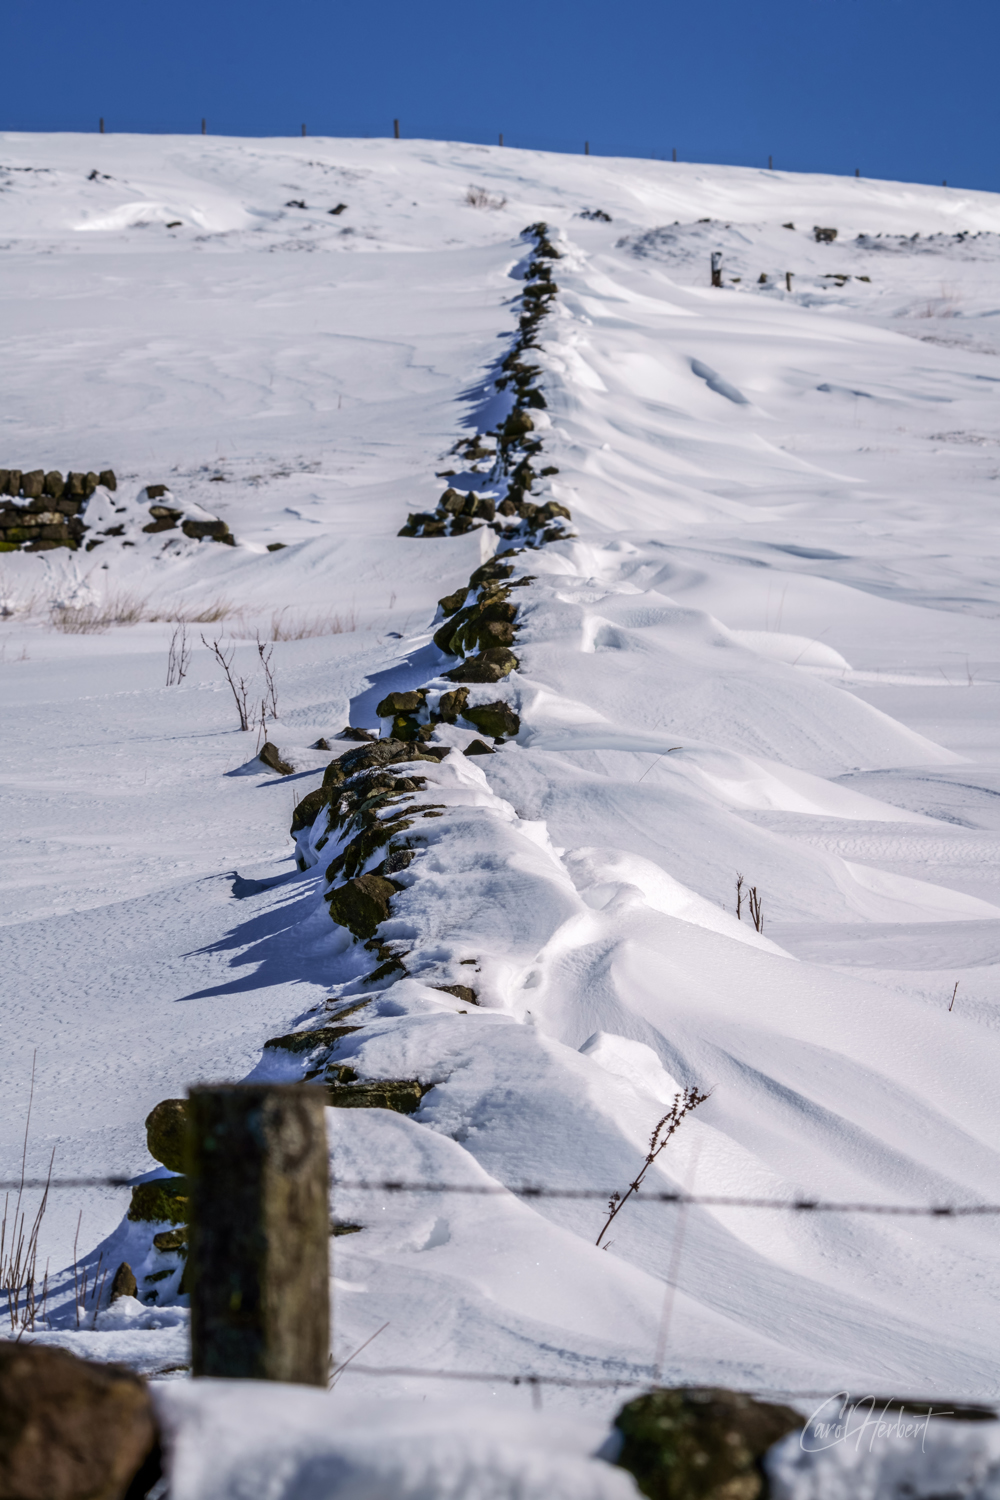 Snow drifting against a stone wall